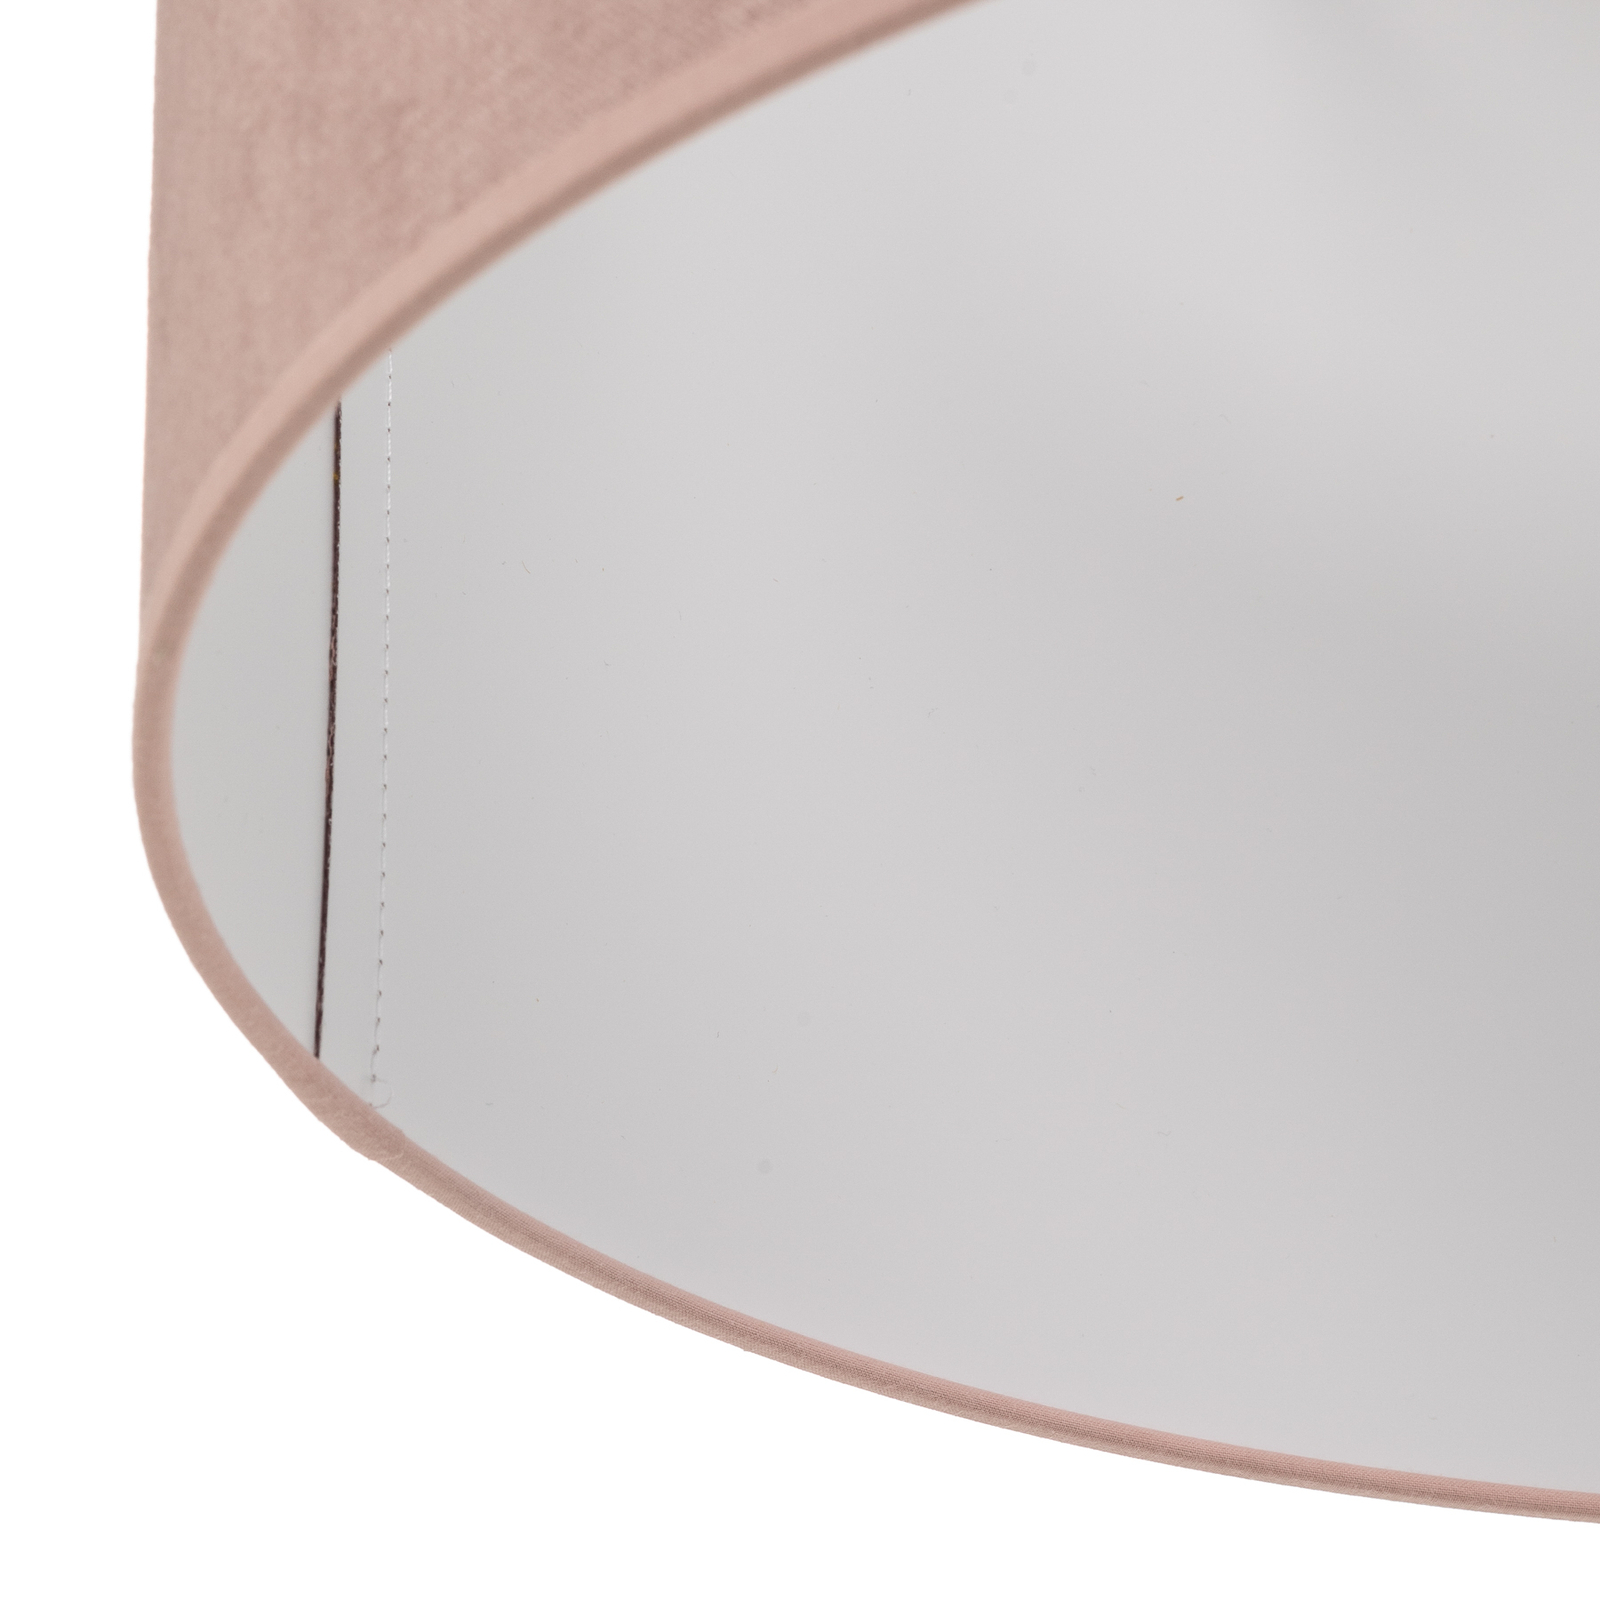 Lampa sufitowa Pastell Roller Ø 60 cm różowa